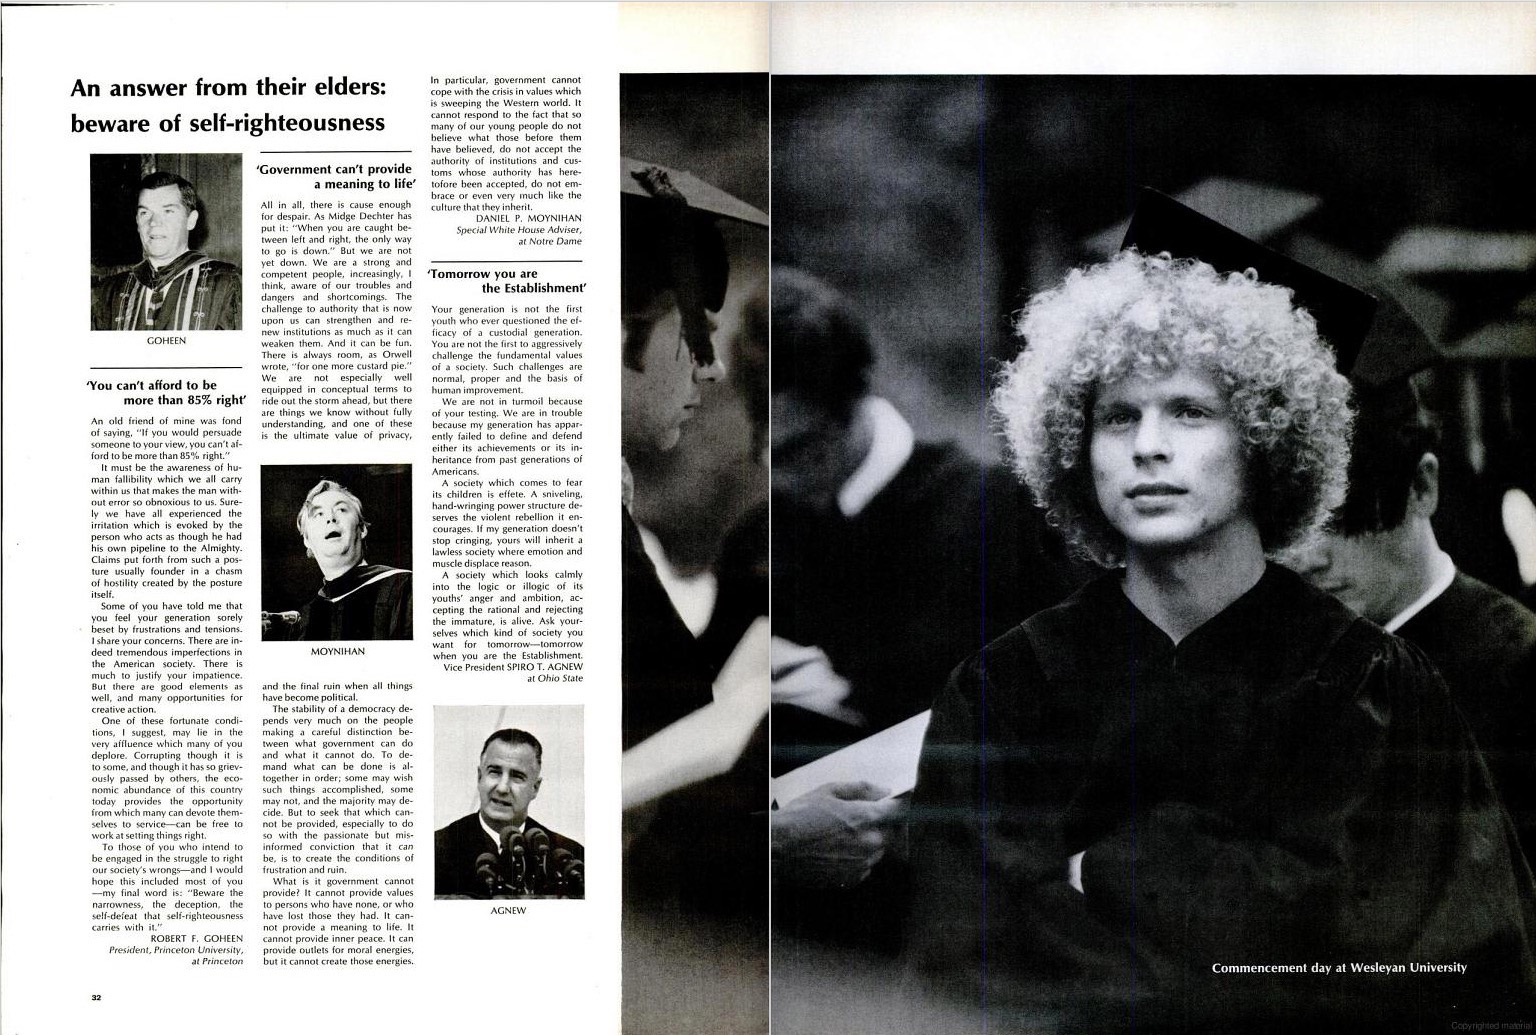 Hillary Clinton in LIFE Magazine, June 20, 1969.